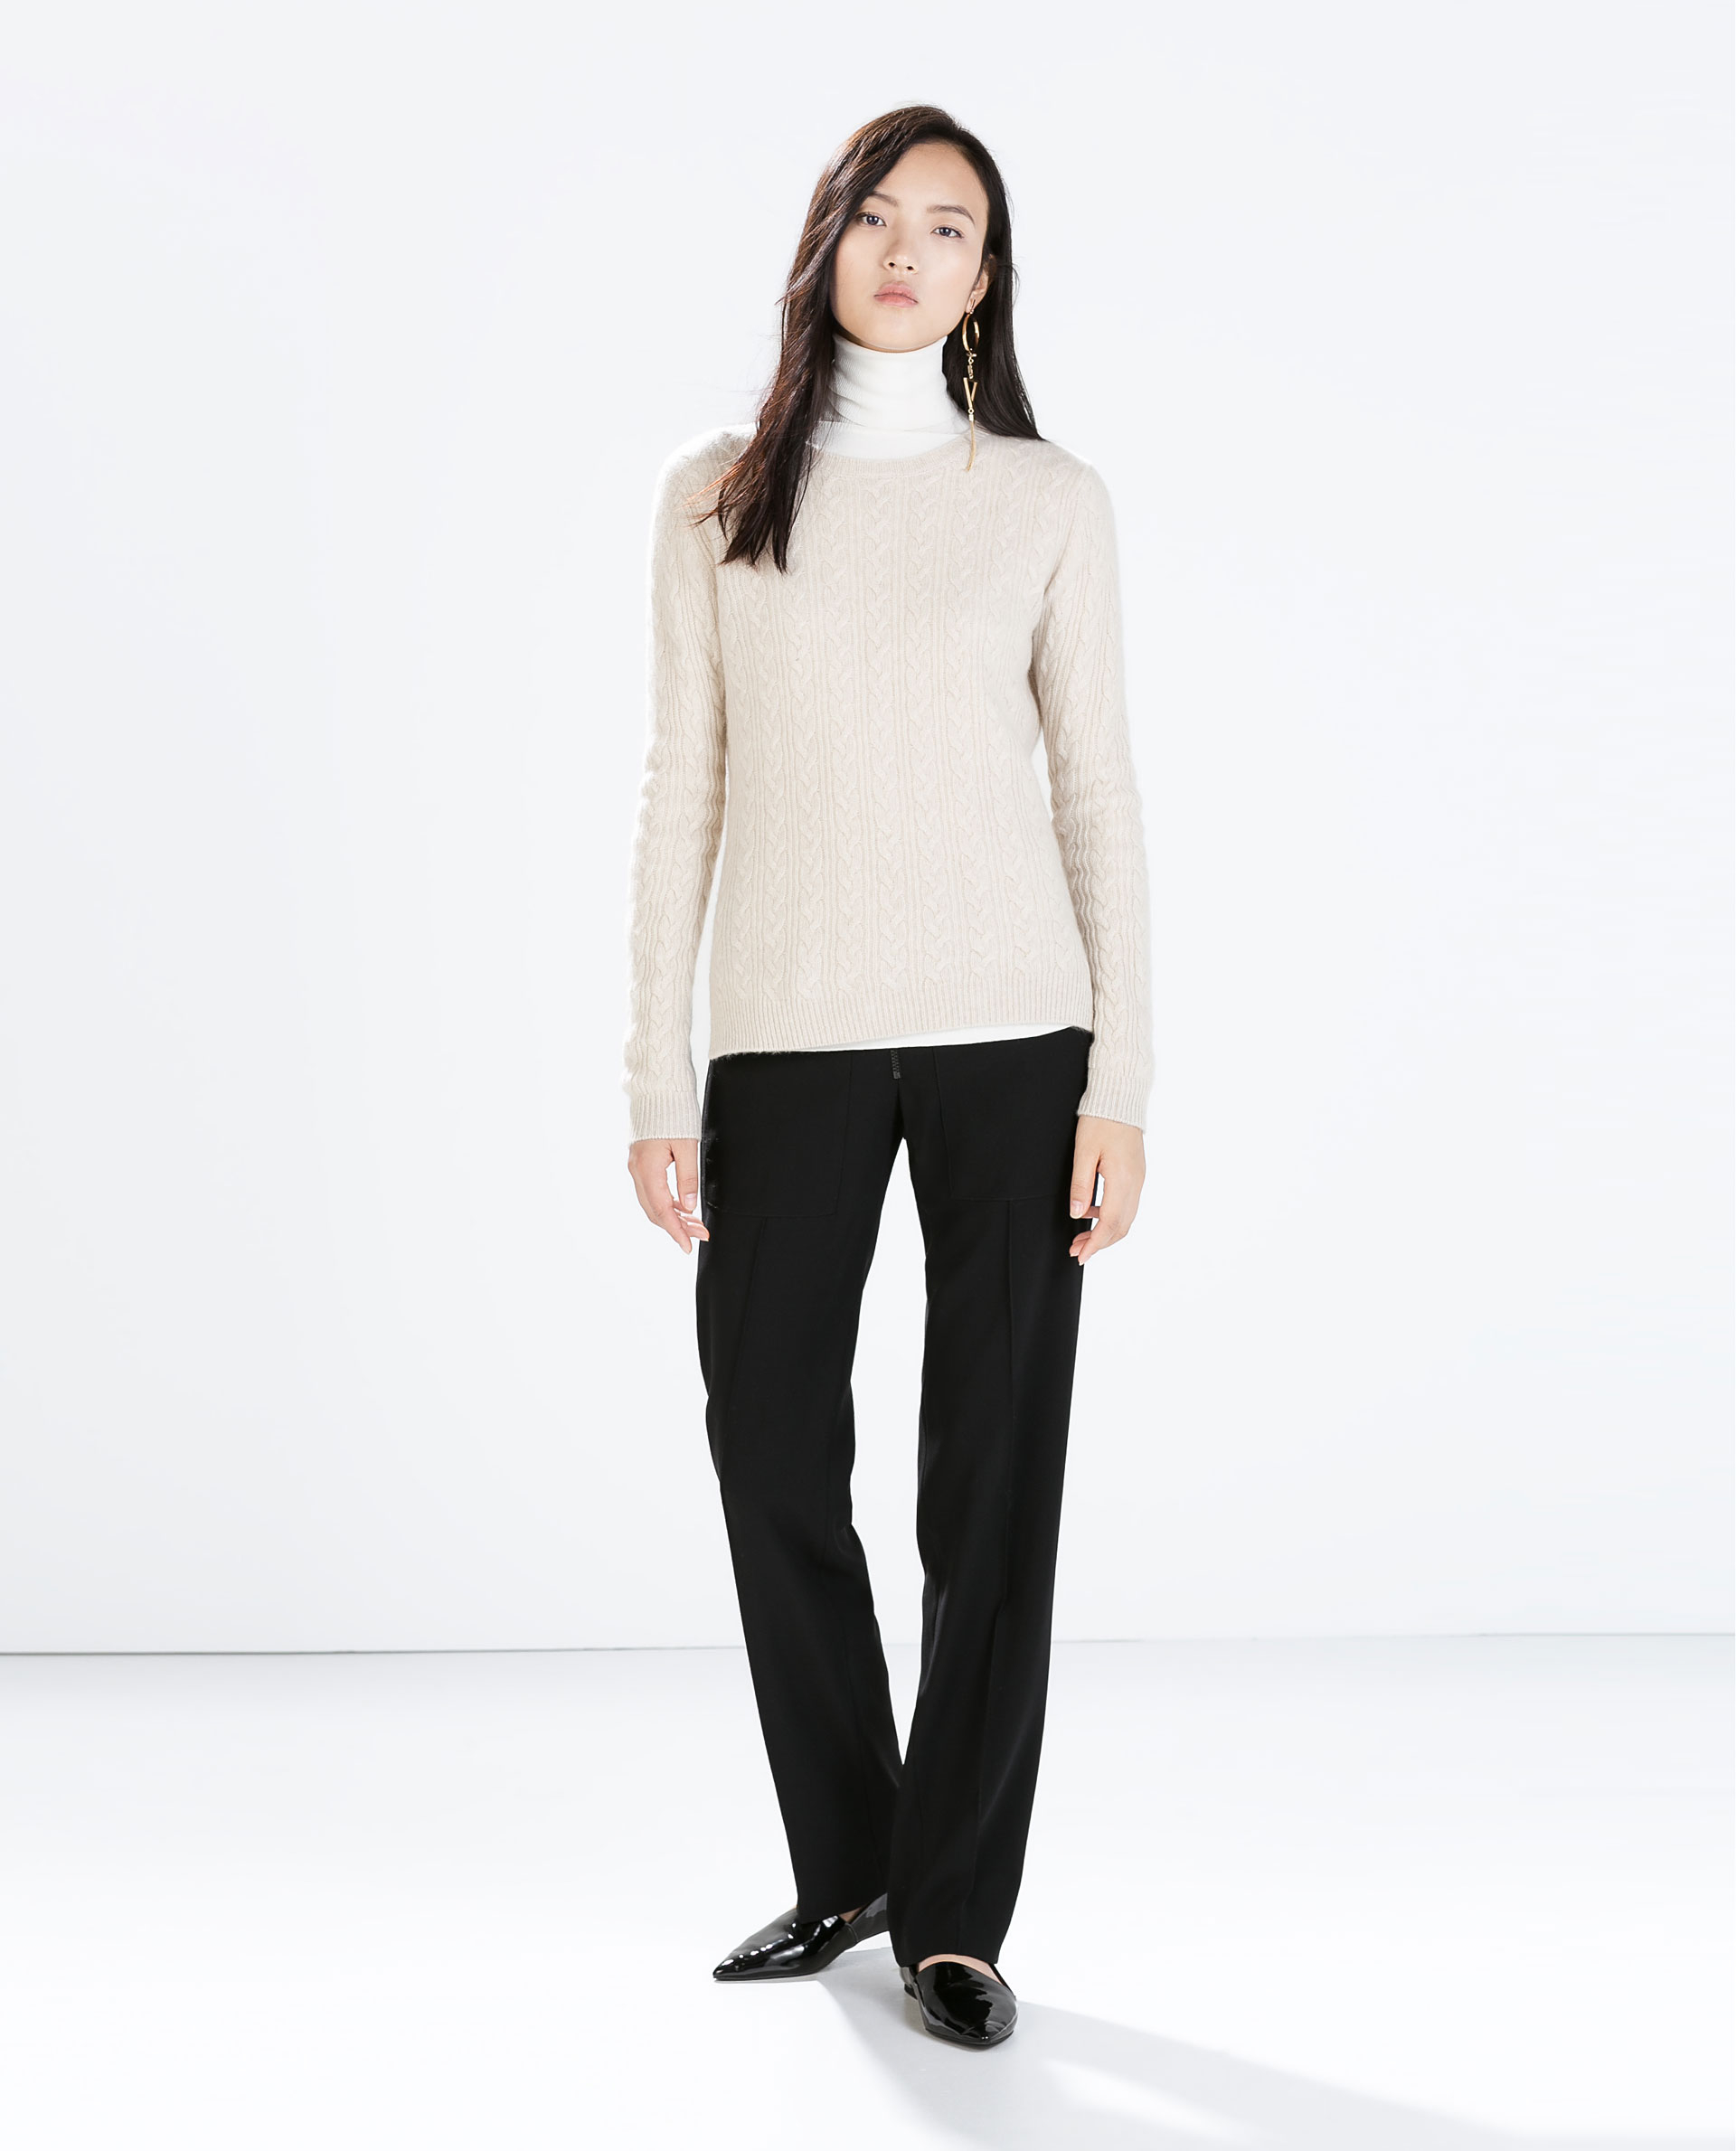 Zara Cableknit Cashmere Sweater in Beige (Sand) | Lyst